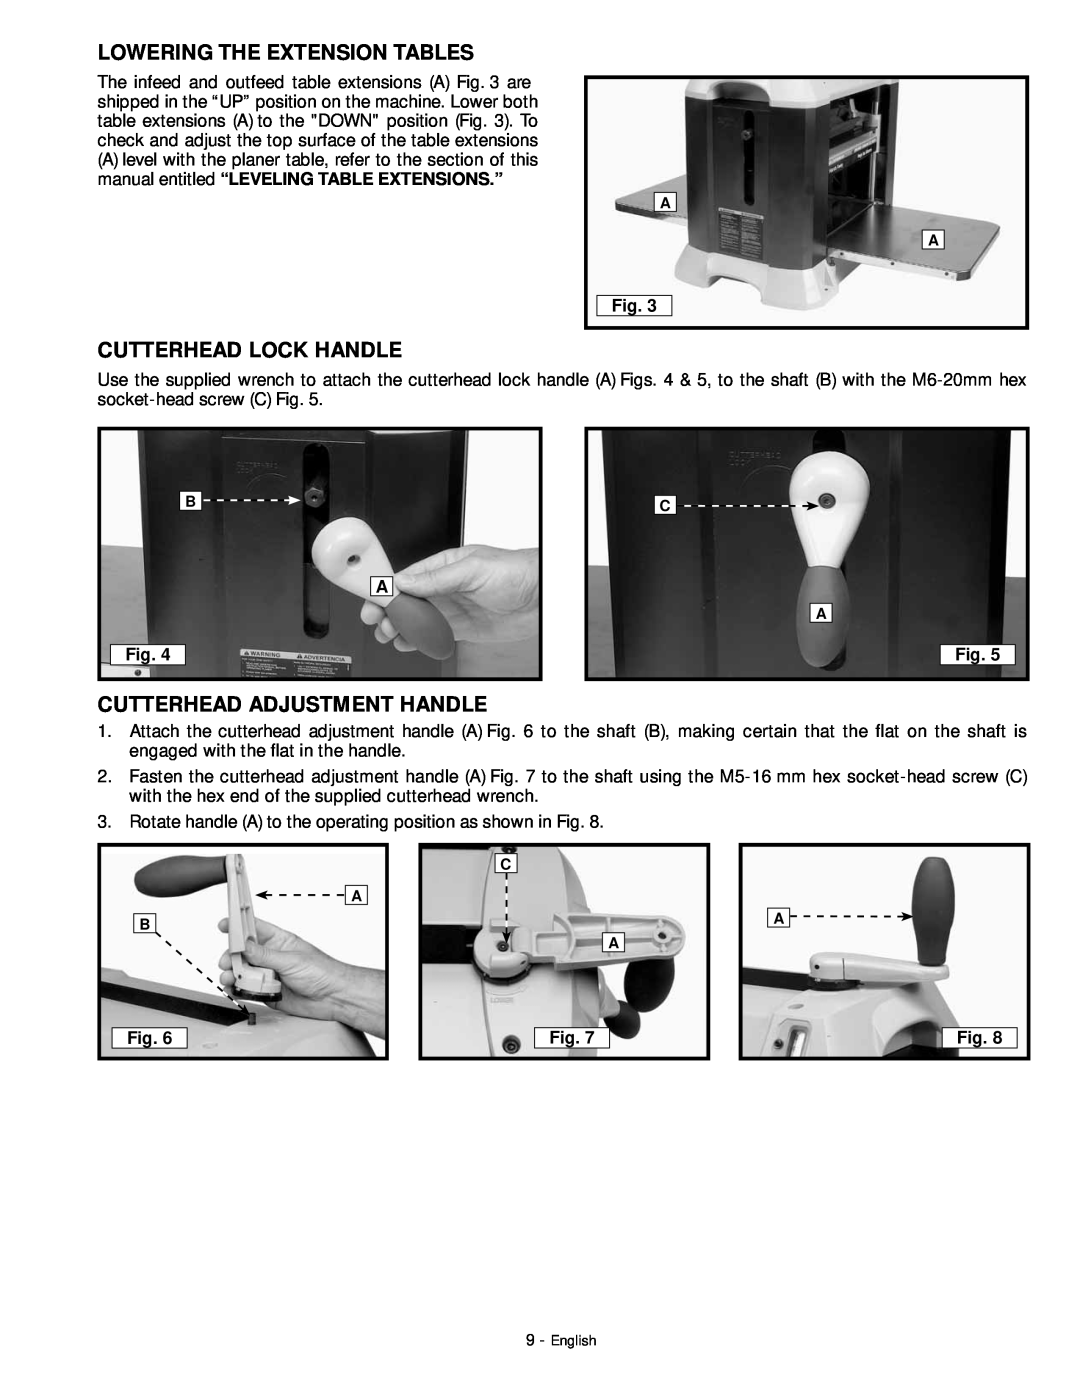 DeWalt 18657 instruction manual Lowering The Extension Tables, Cutterhead Lock Handle, Cutterhead Adjustment Handle 